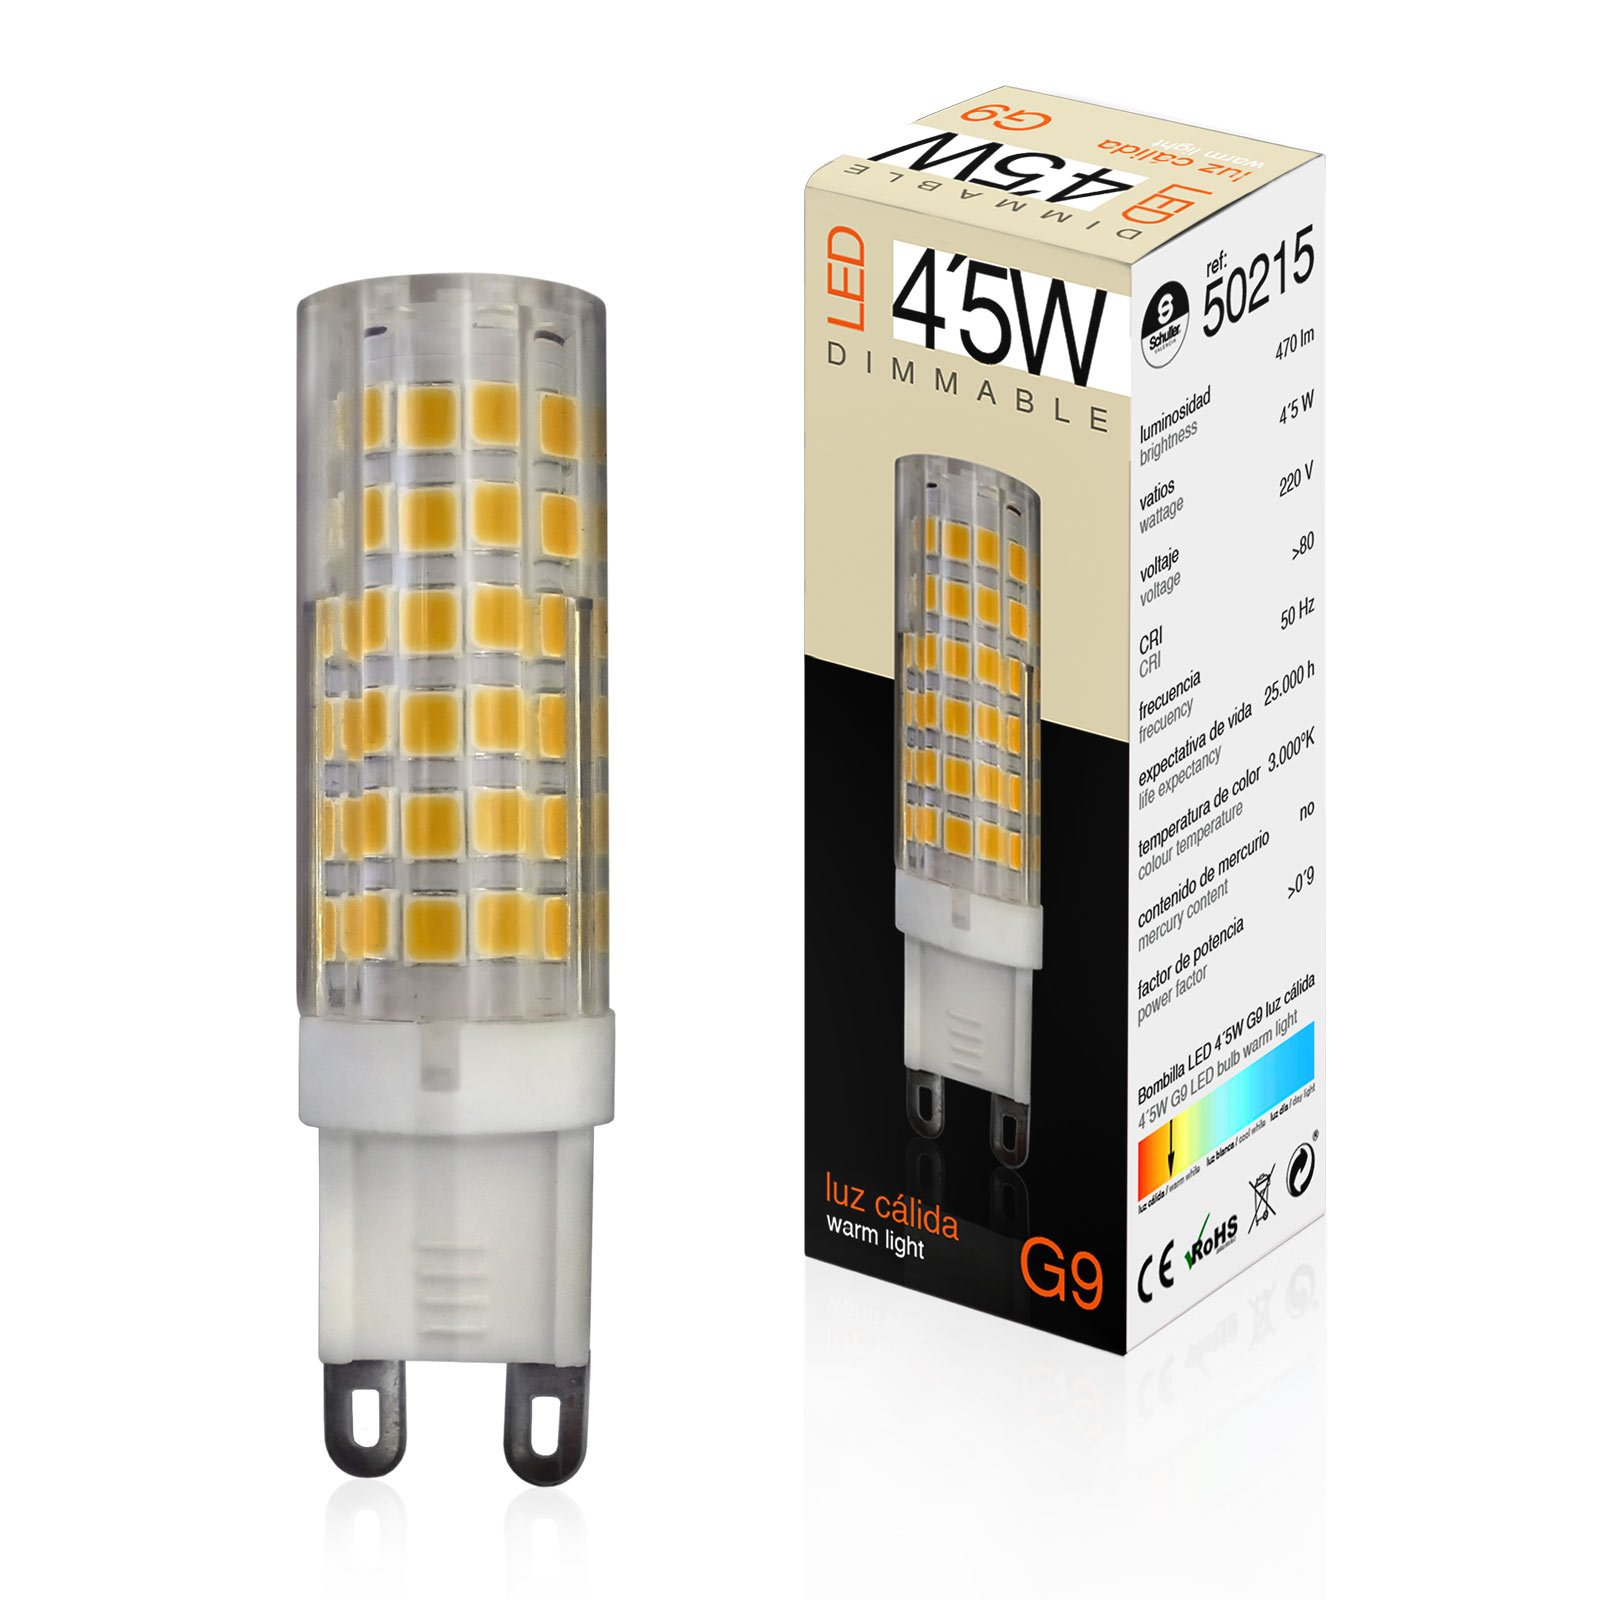 LED stiftfitting G9 4,5W 3.000K dimbaar